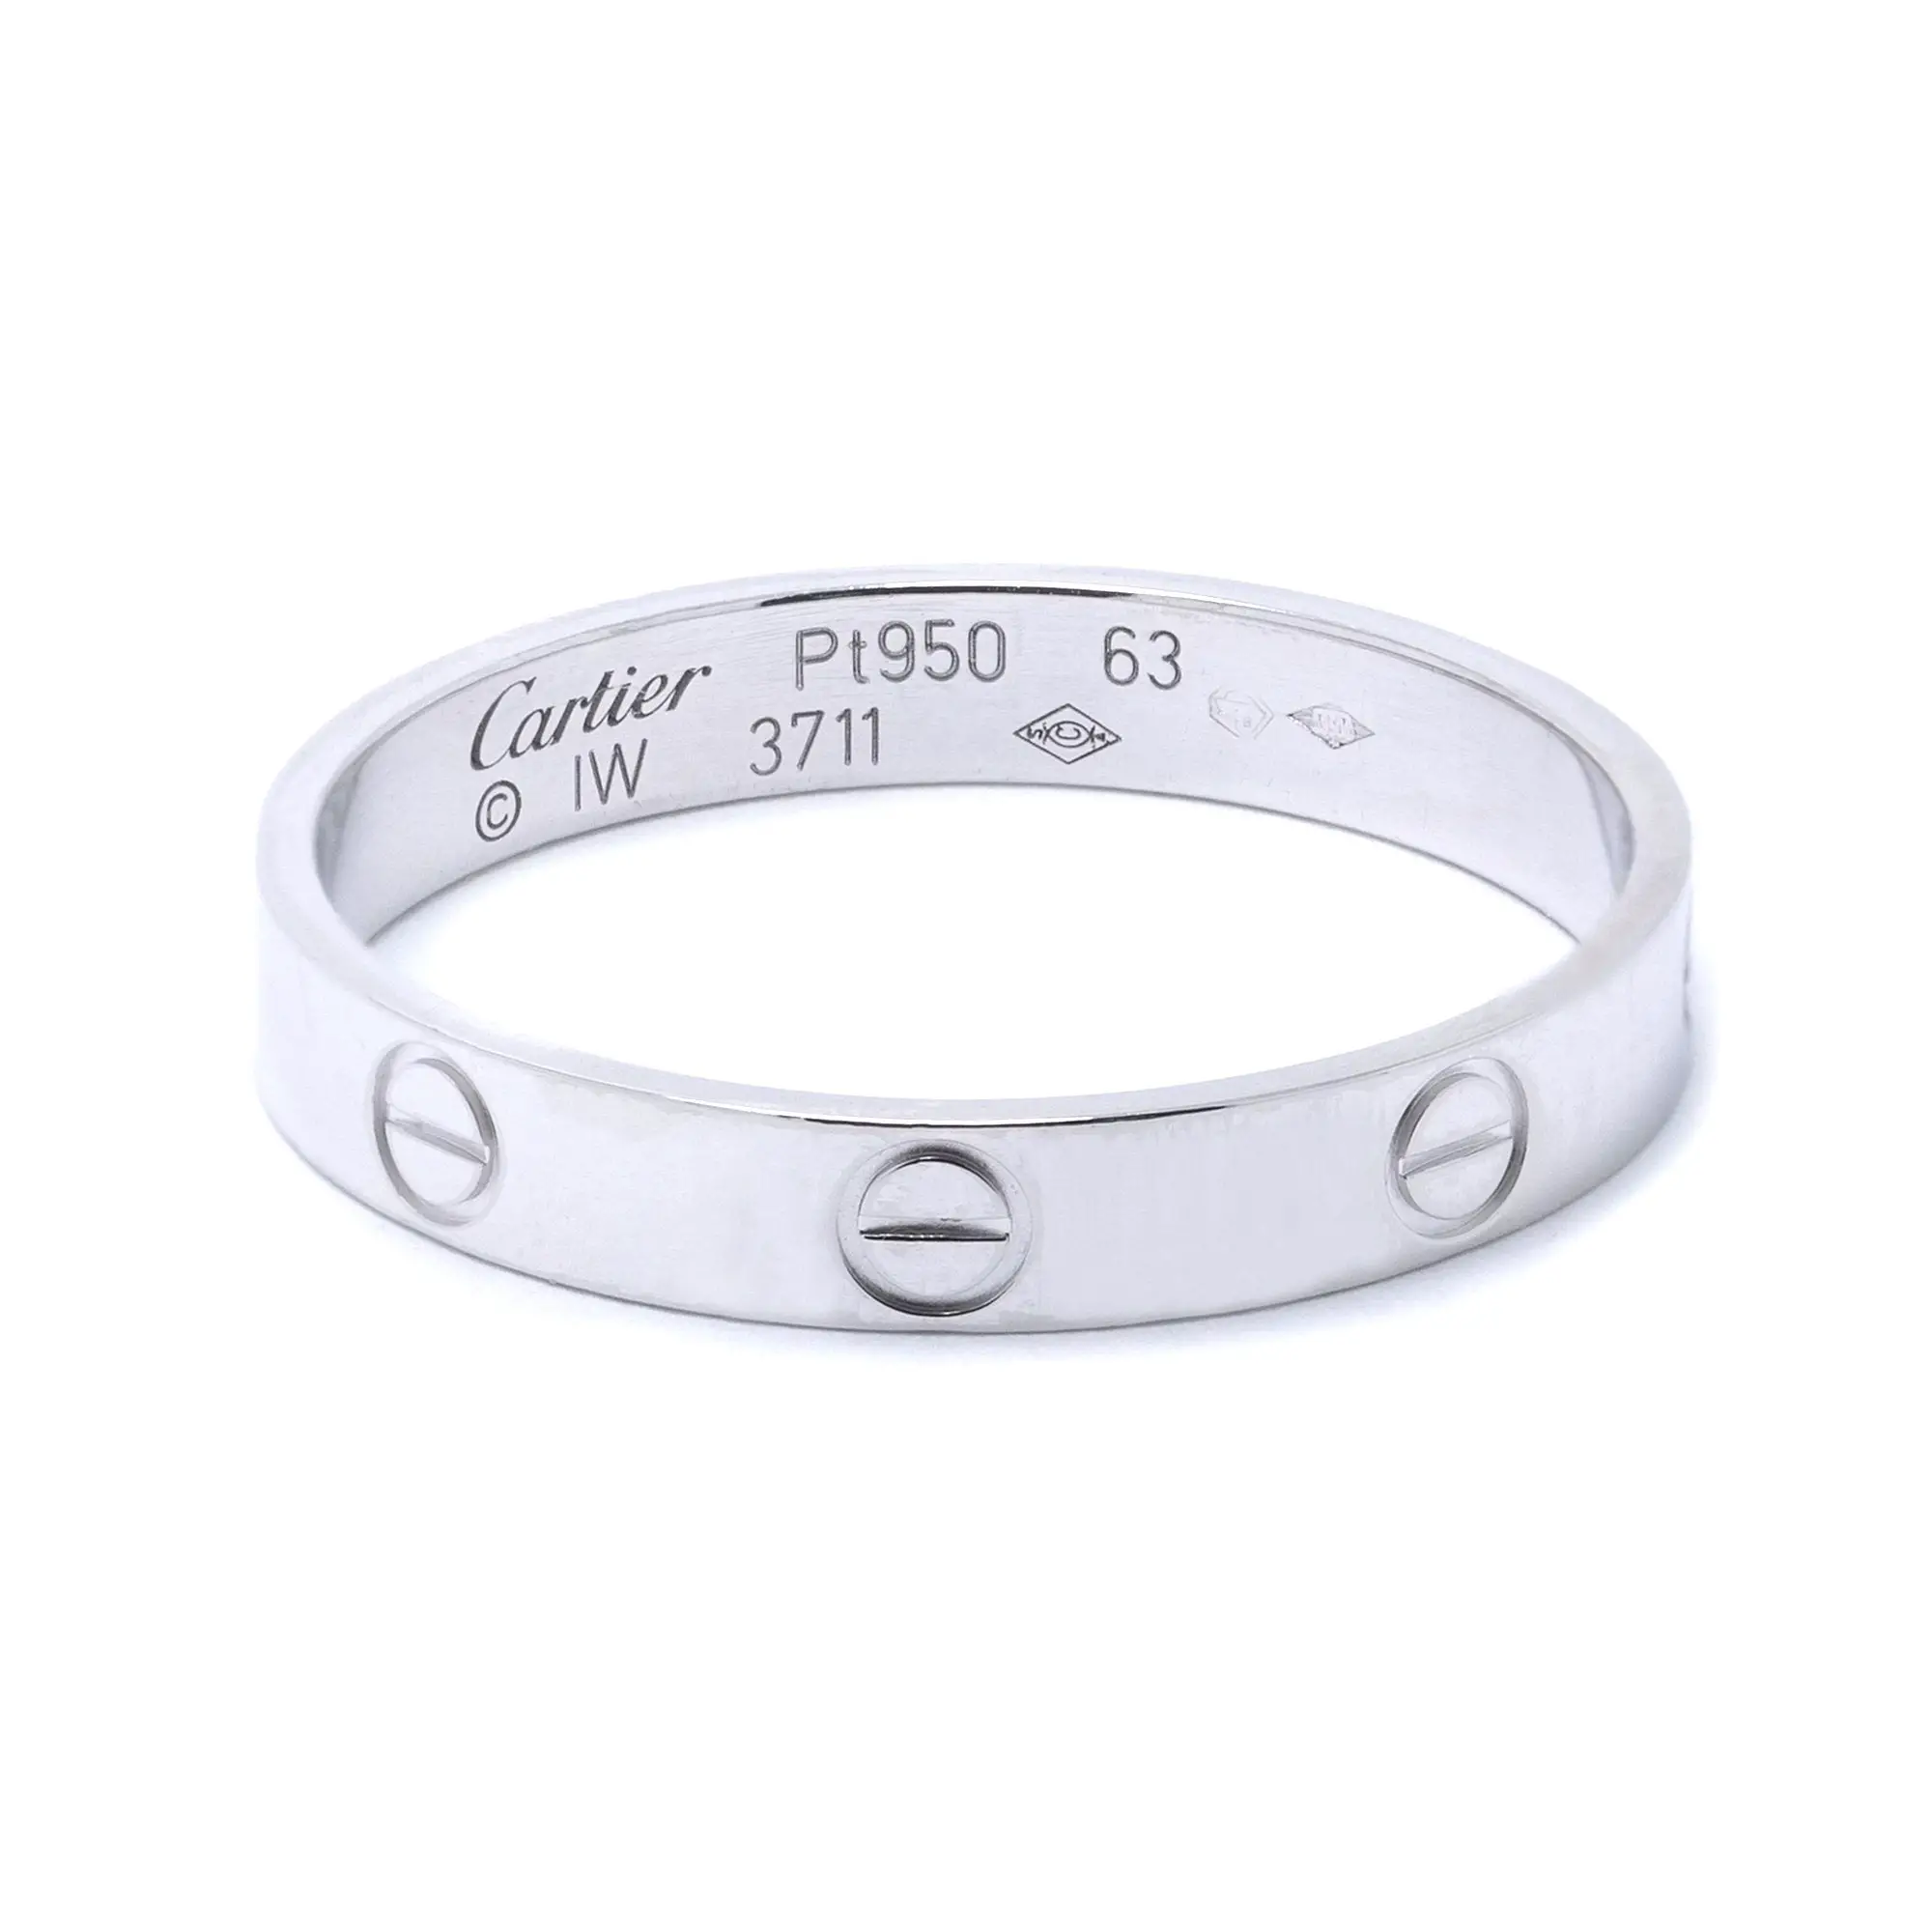 Cartier Wedding Rings For Men